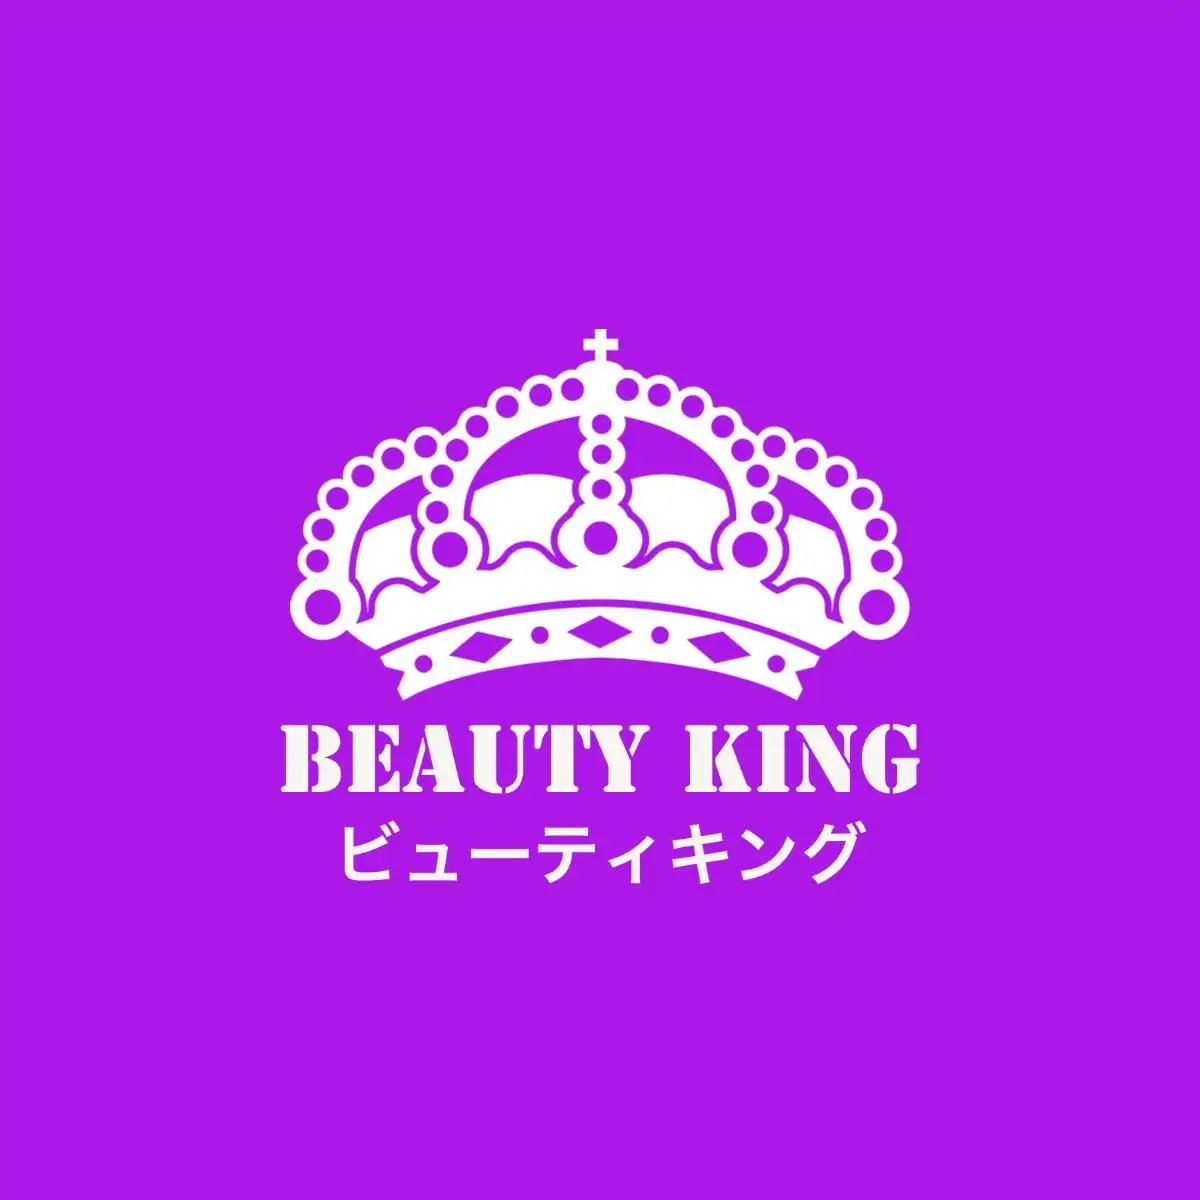 Beauty link logo